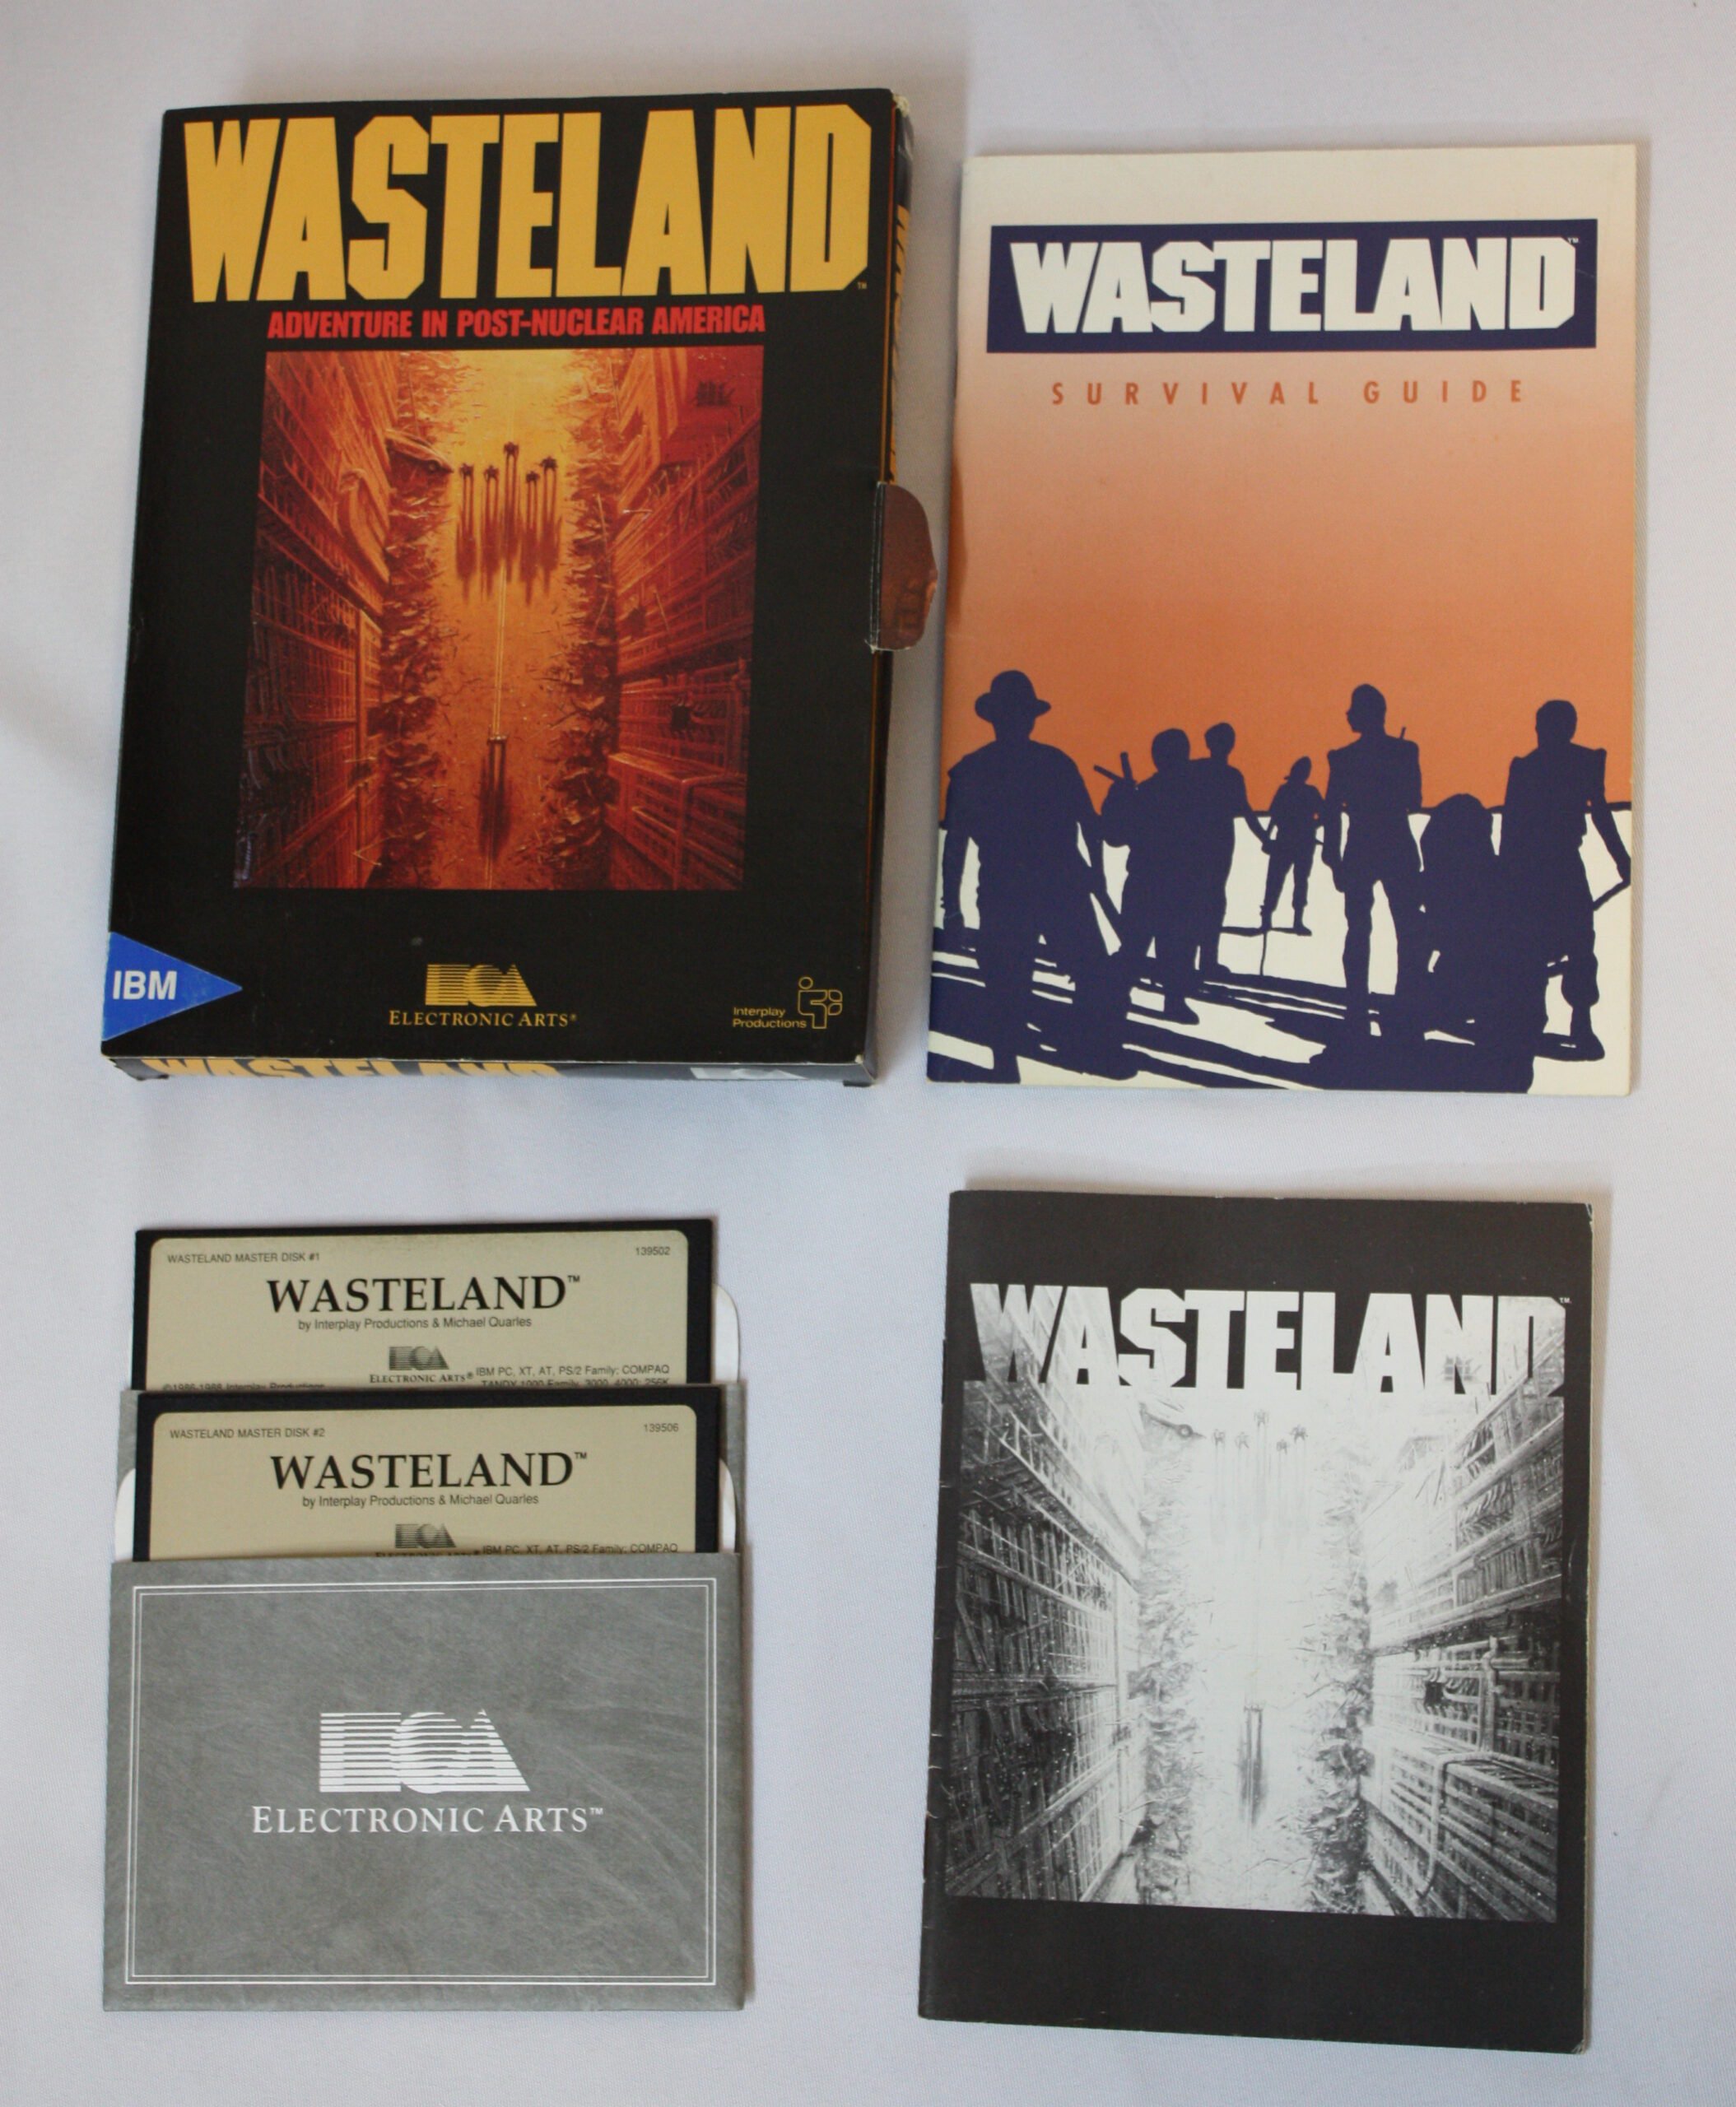 wasteland 1987 package scaled - فال‌اوت از صفر تا صد؛ آخرین جنگ بشریت